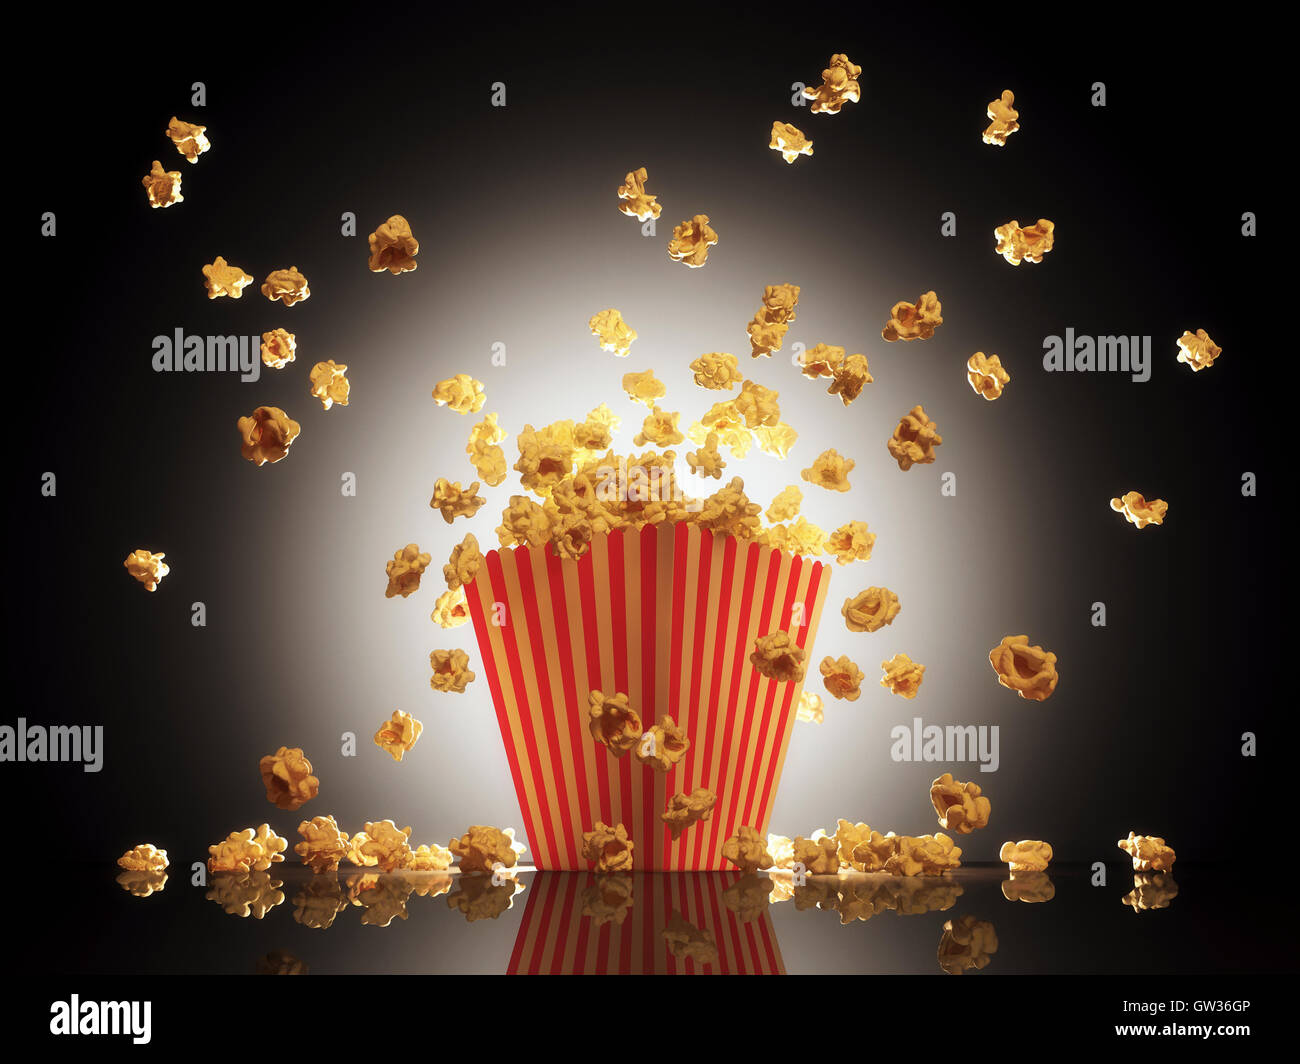 Popcorn exploding from bucket. Stock Photo